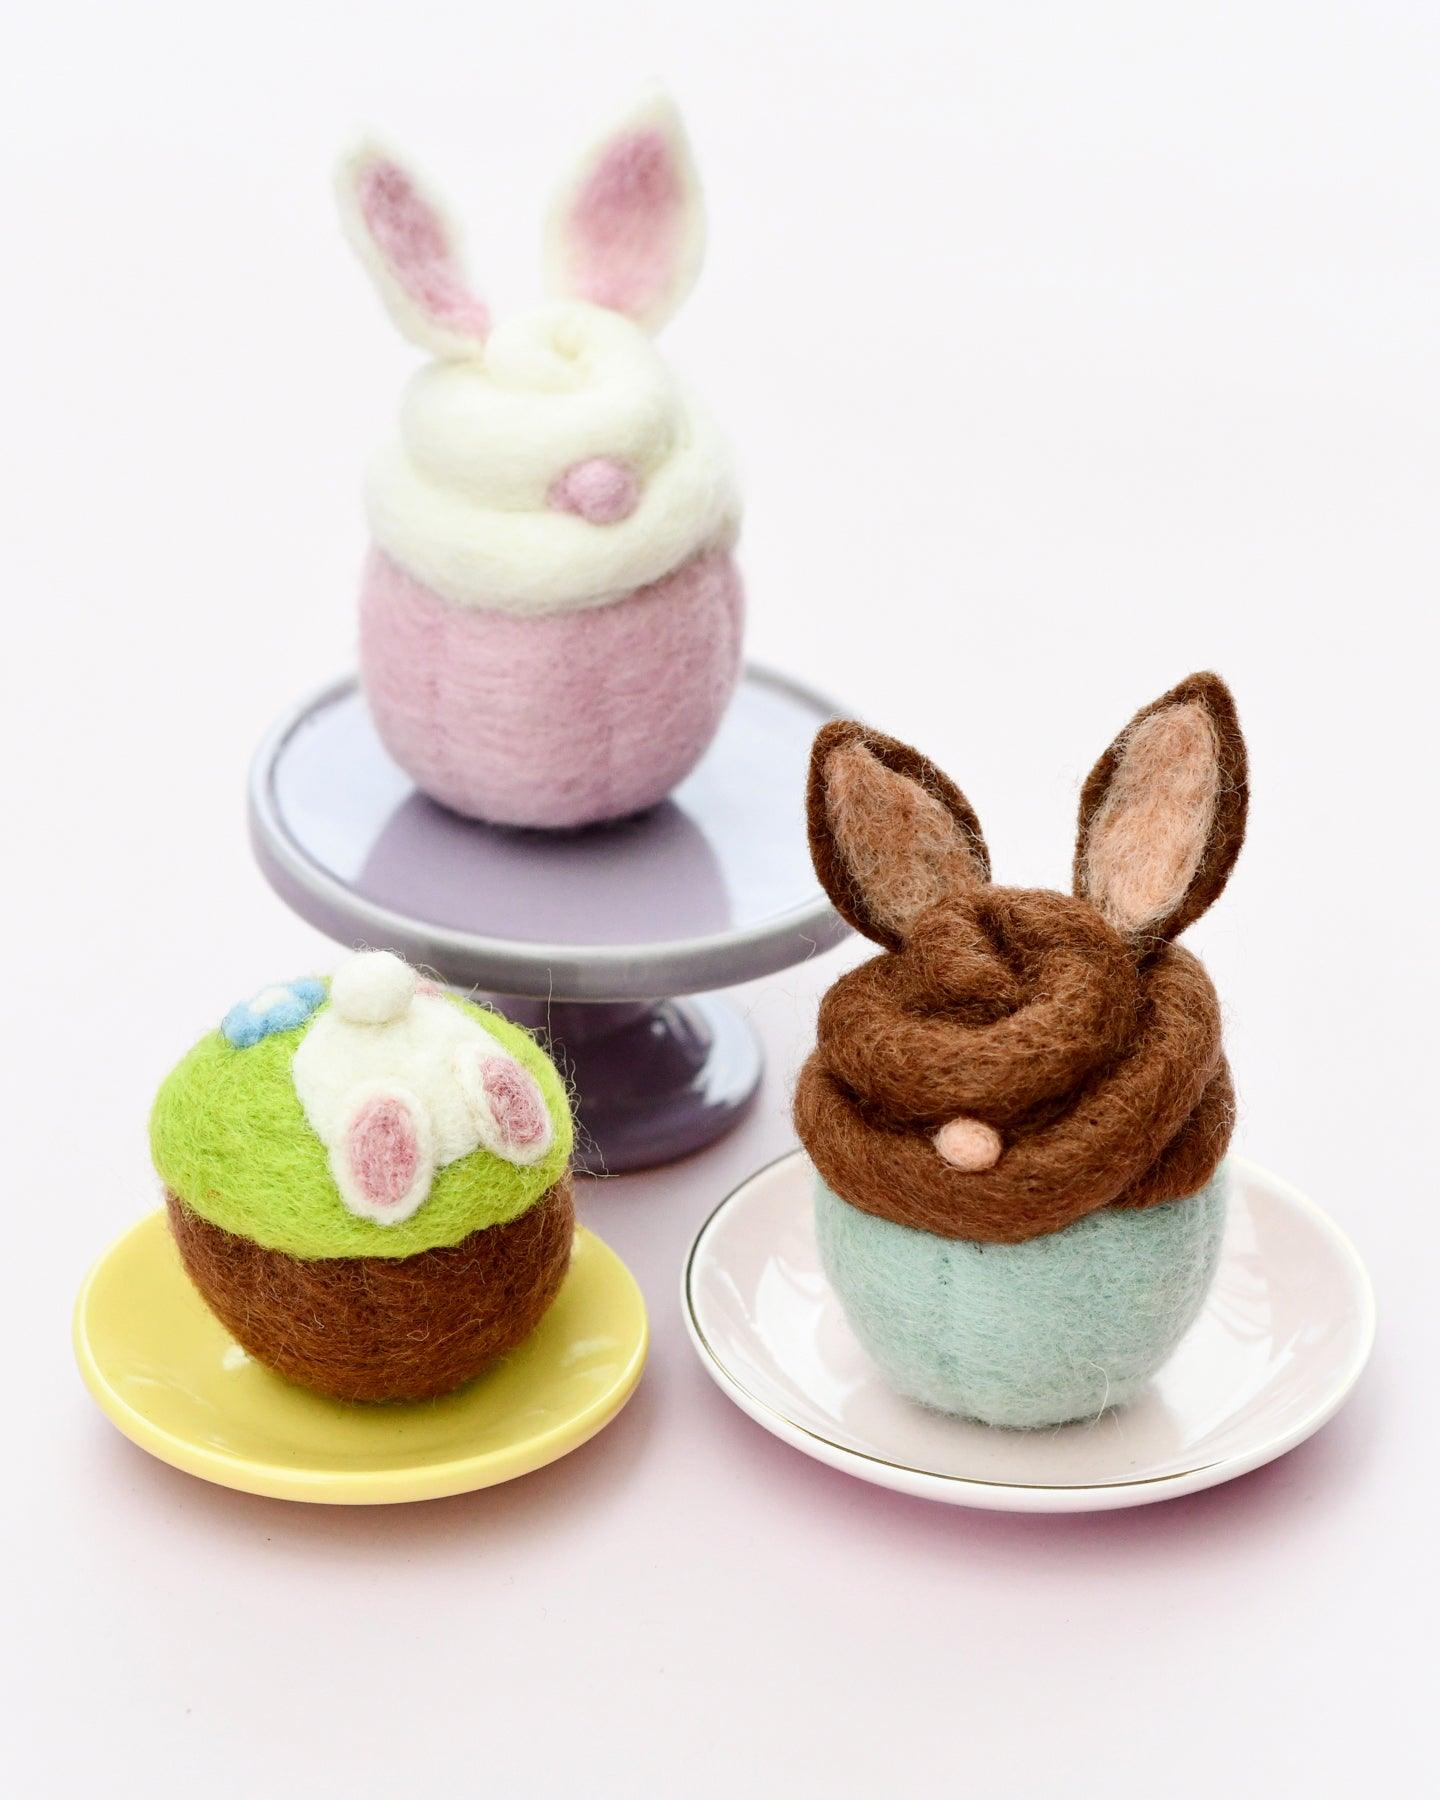 Felt Cupcake - Easter Chocolate Bunny with Ears - Tara Treasures